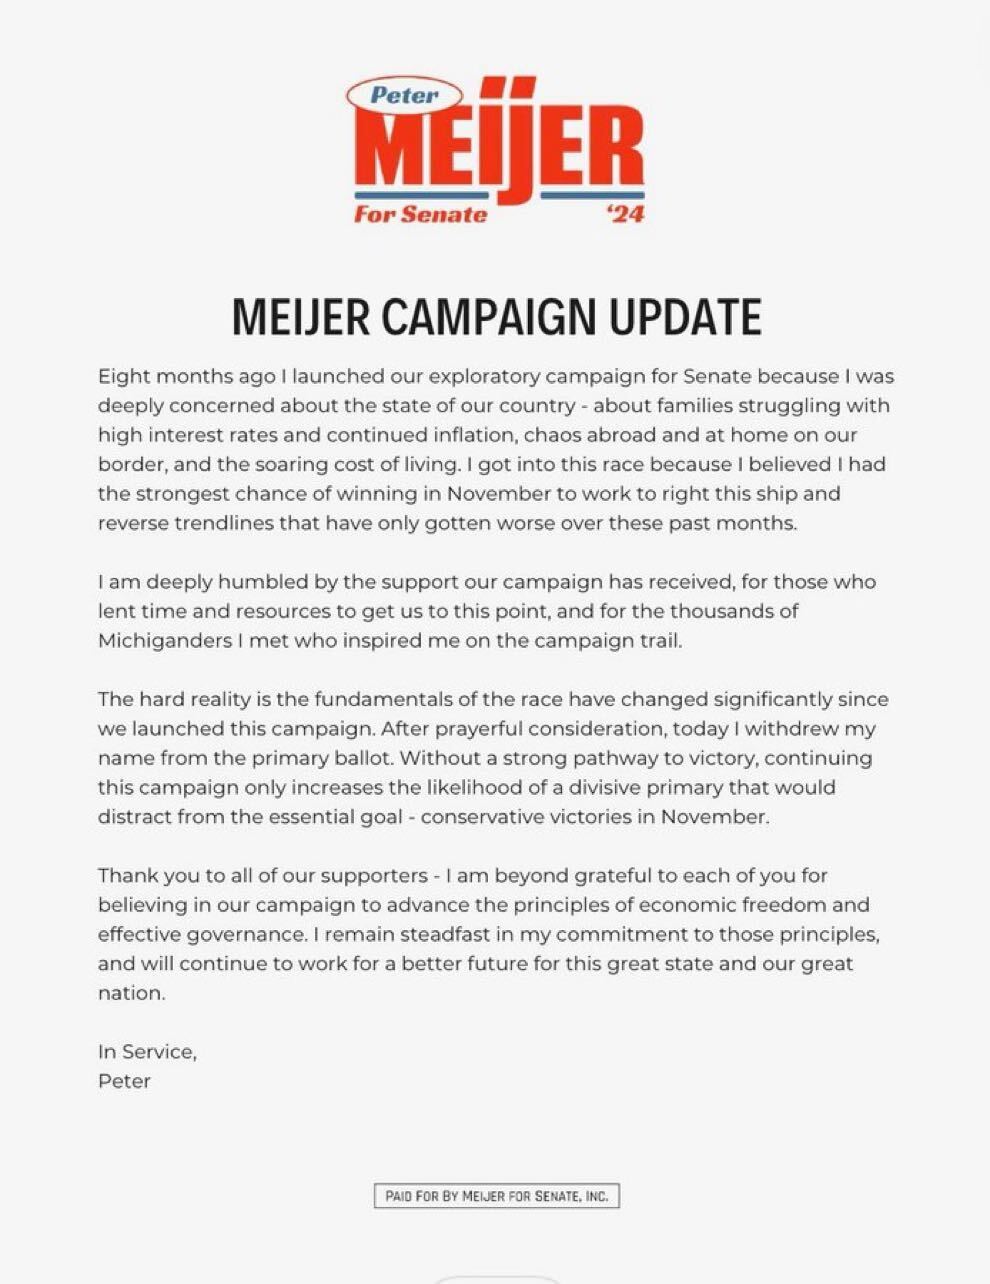 Meijer statement